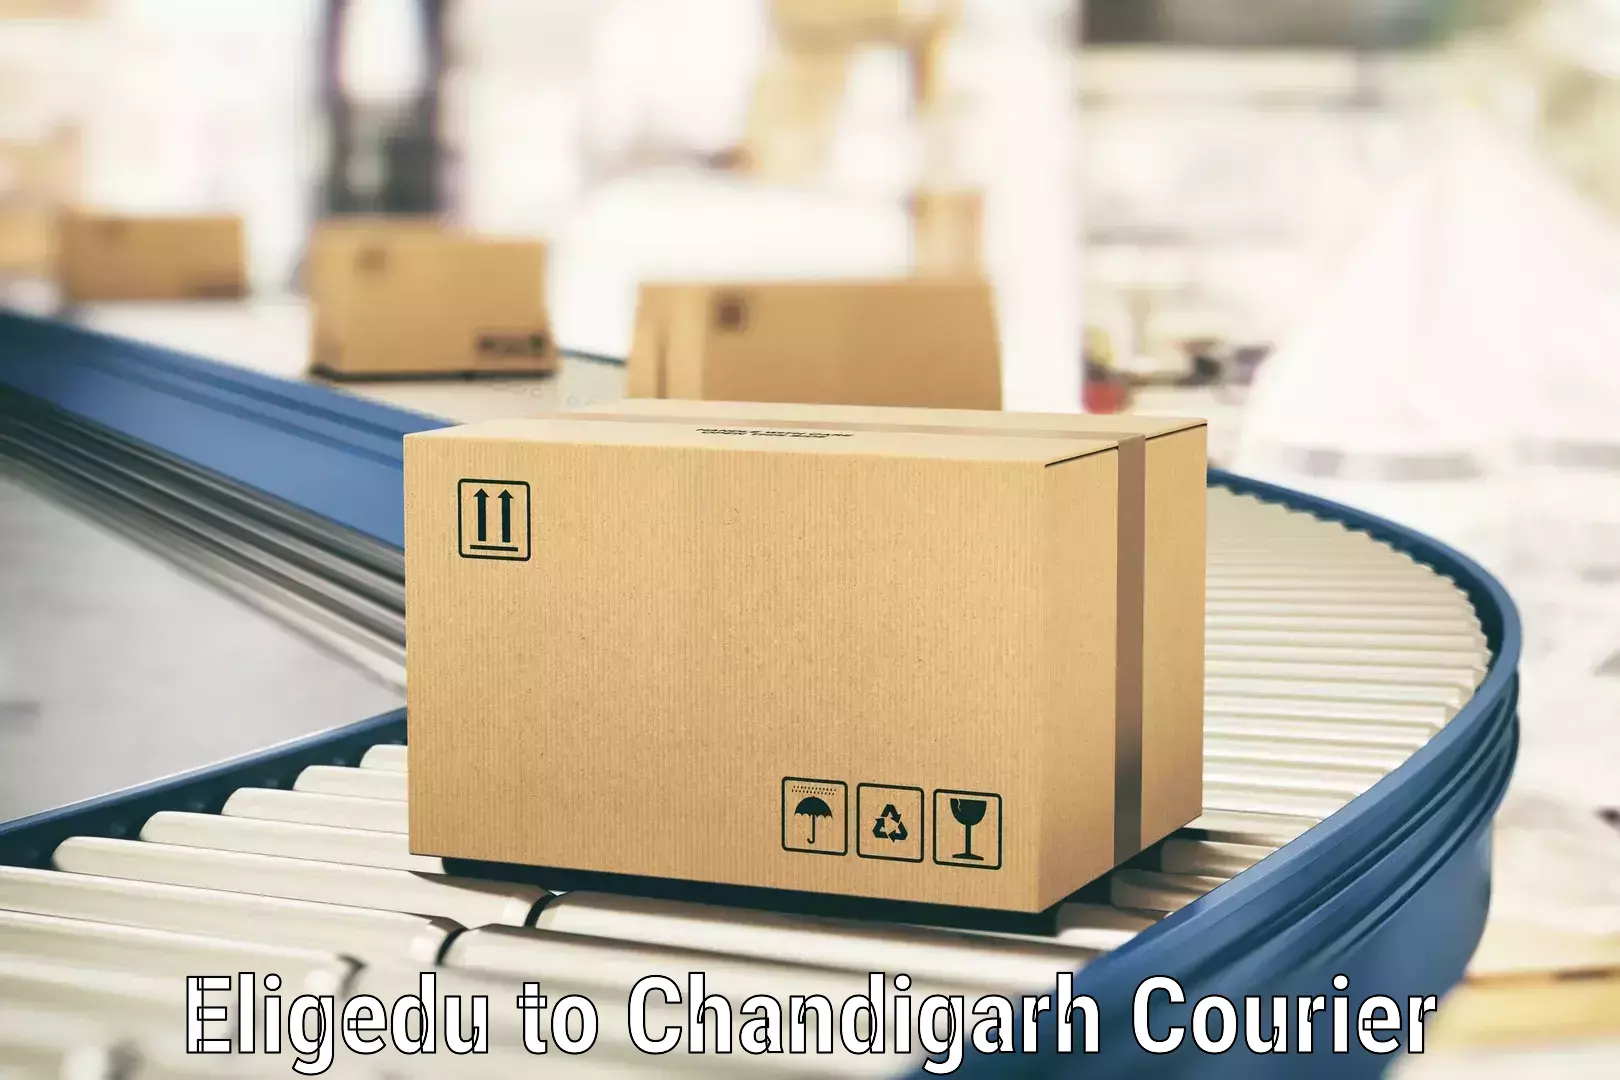 Ground shipping Eligedu to Chandigarh